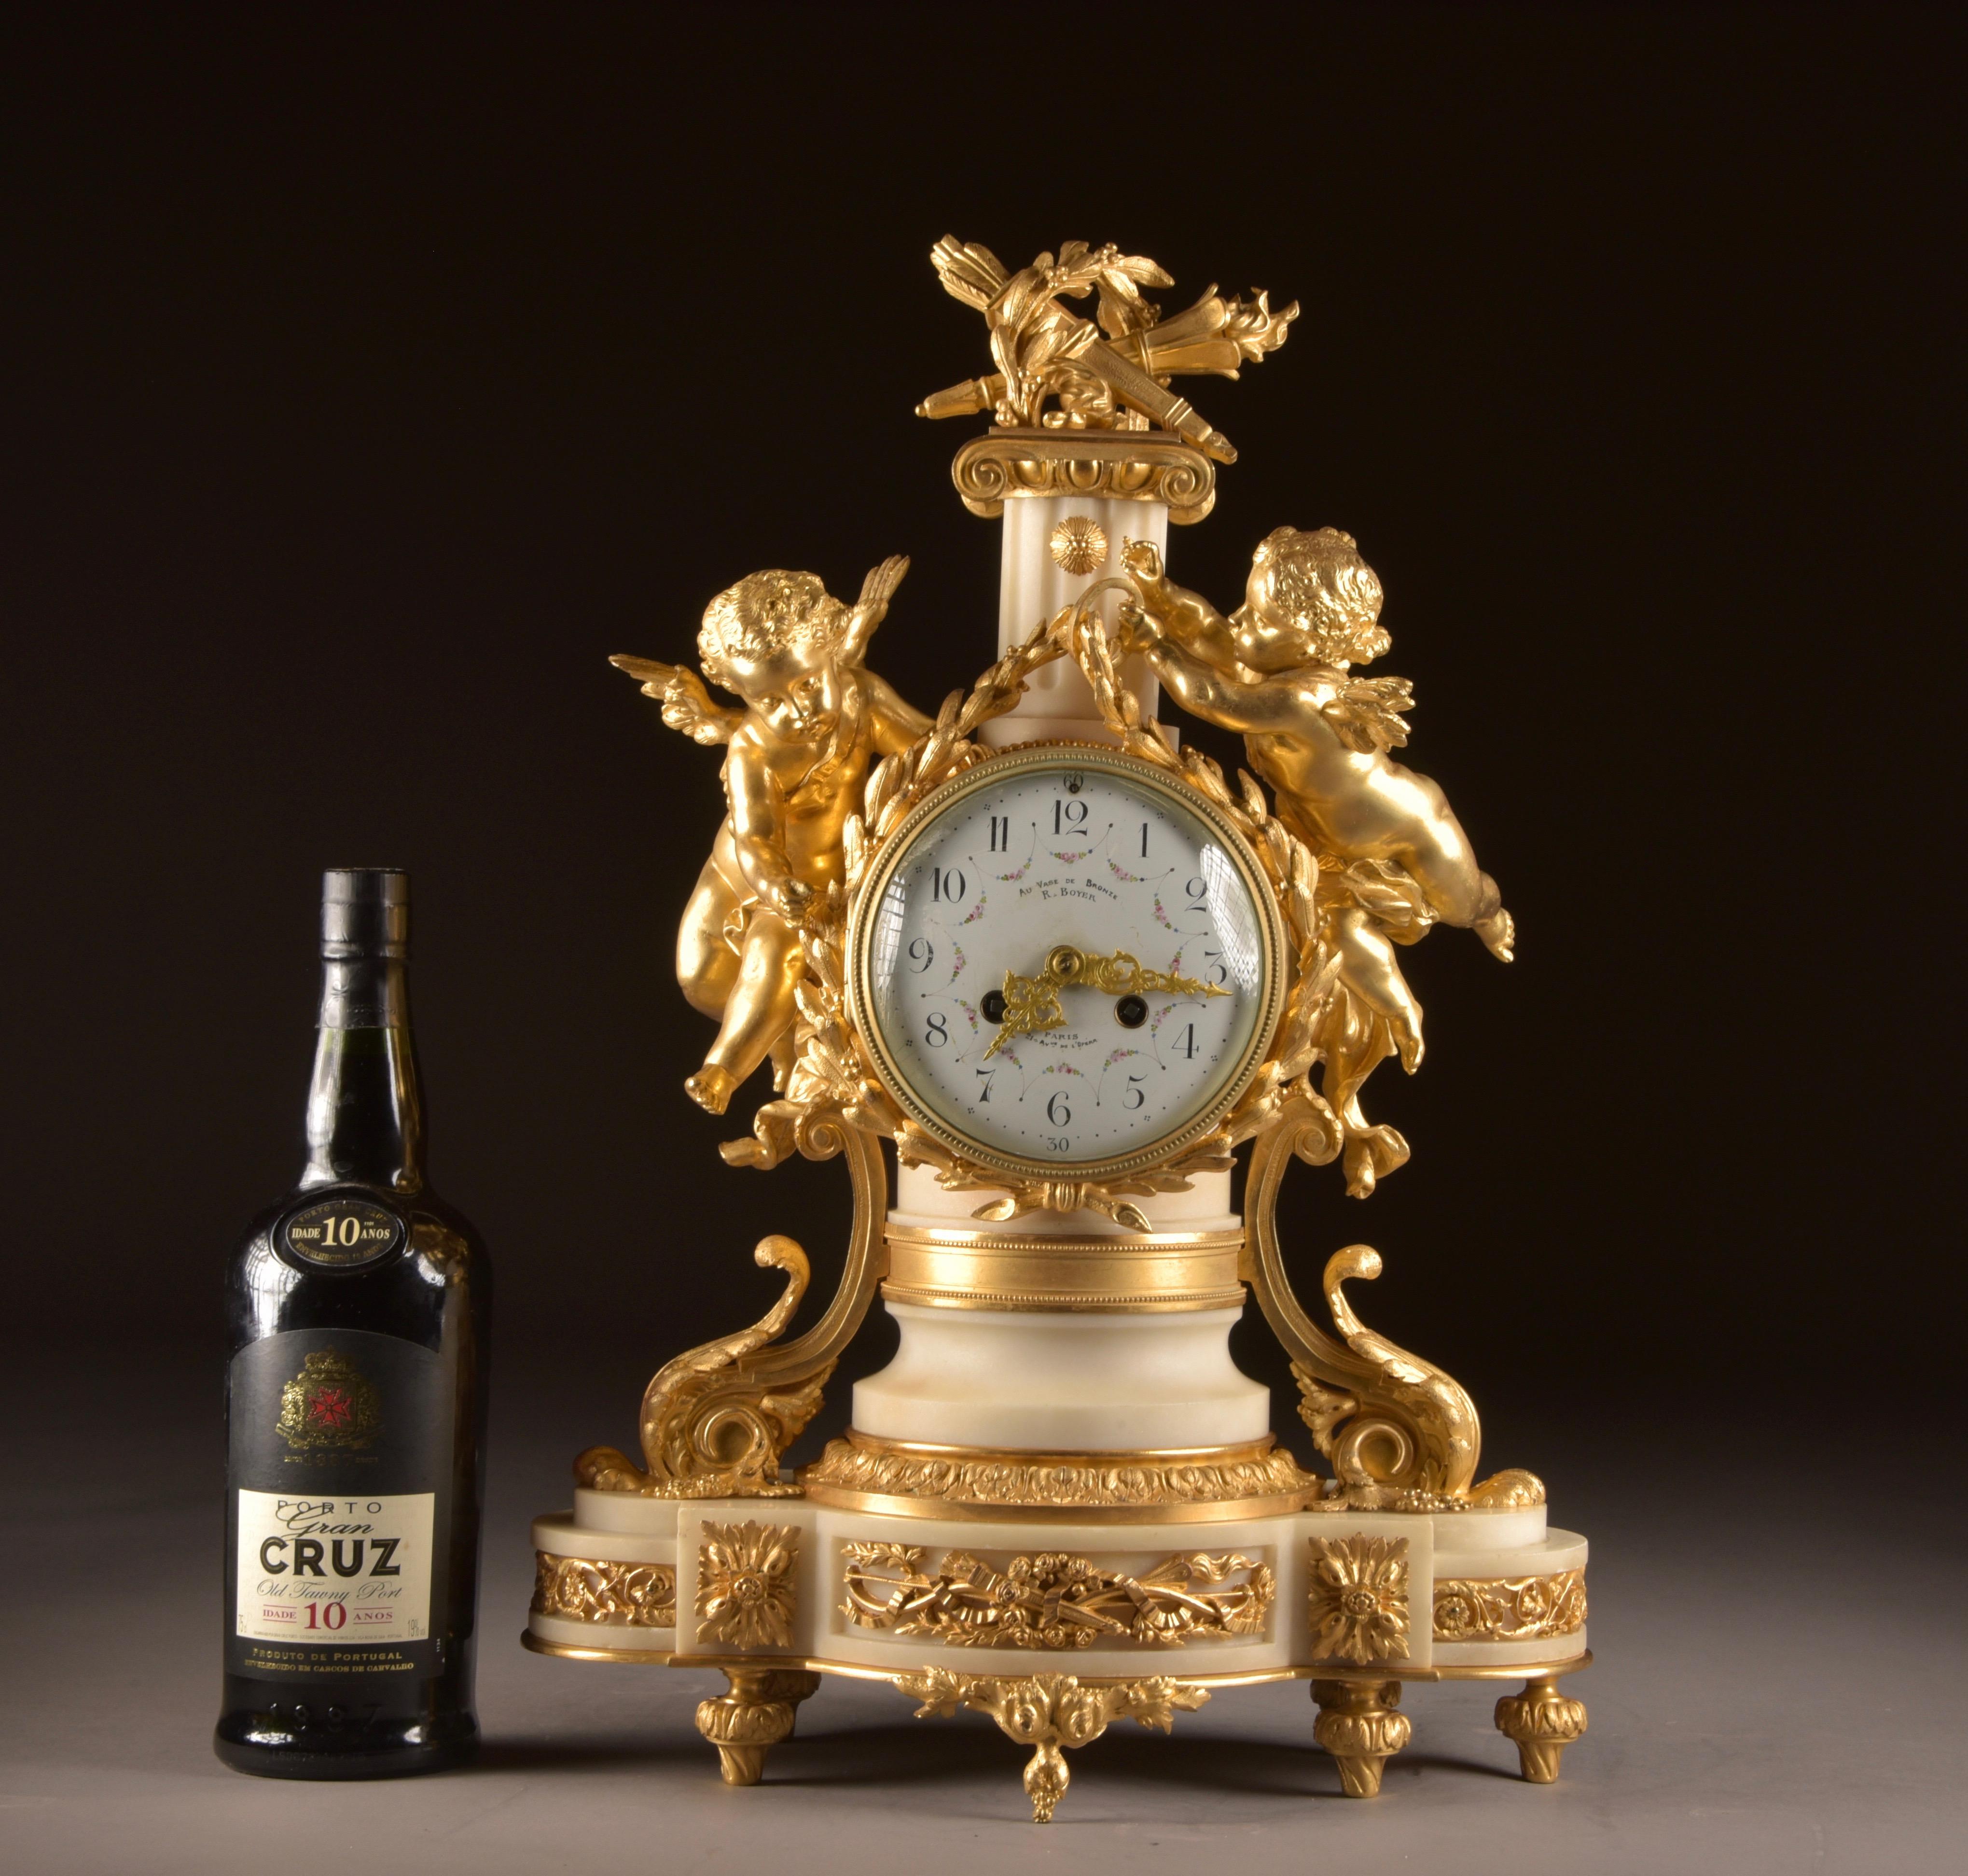 Impressive clock with 2 large cherubs in Louis XVI style.
Signed with: Au vase de bronze